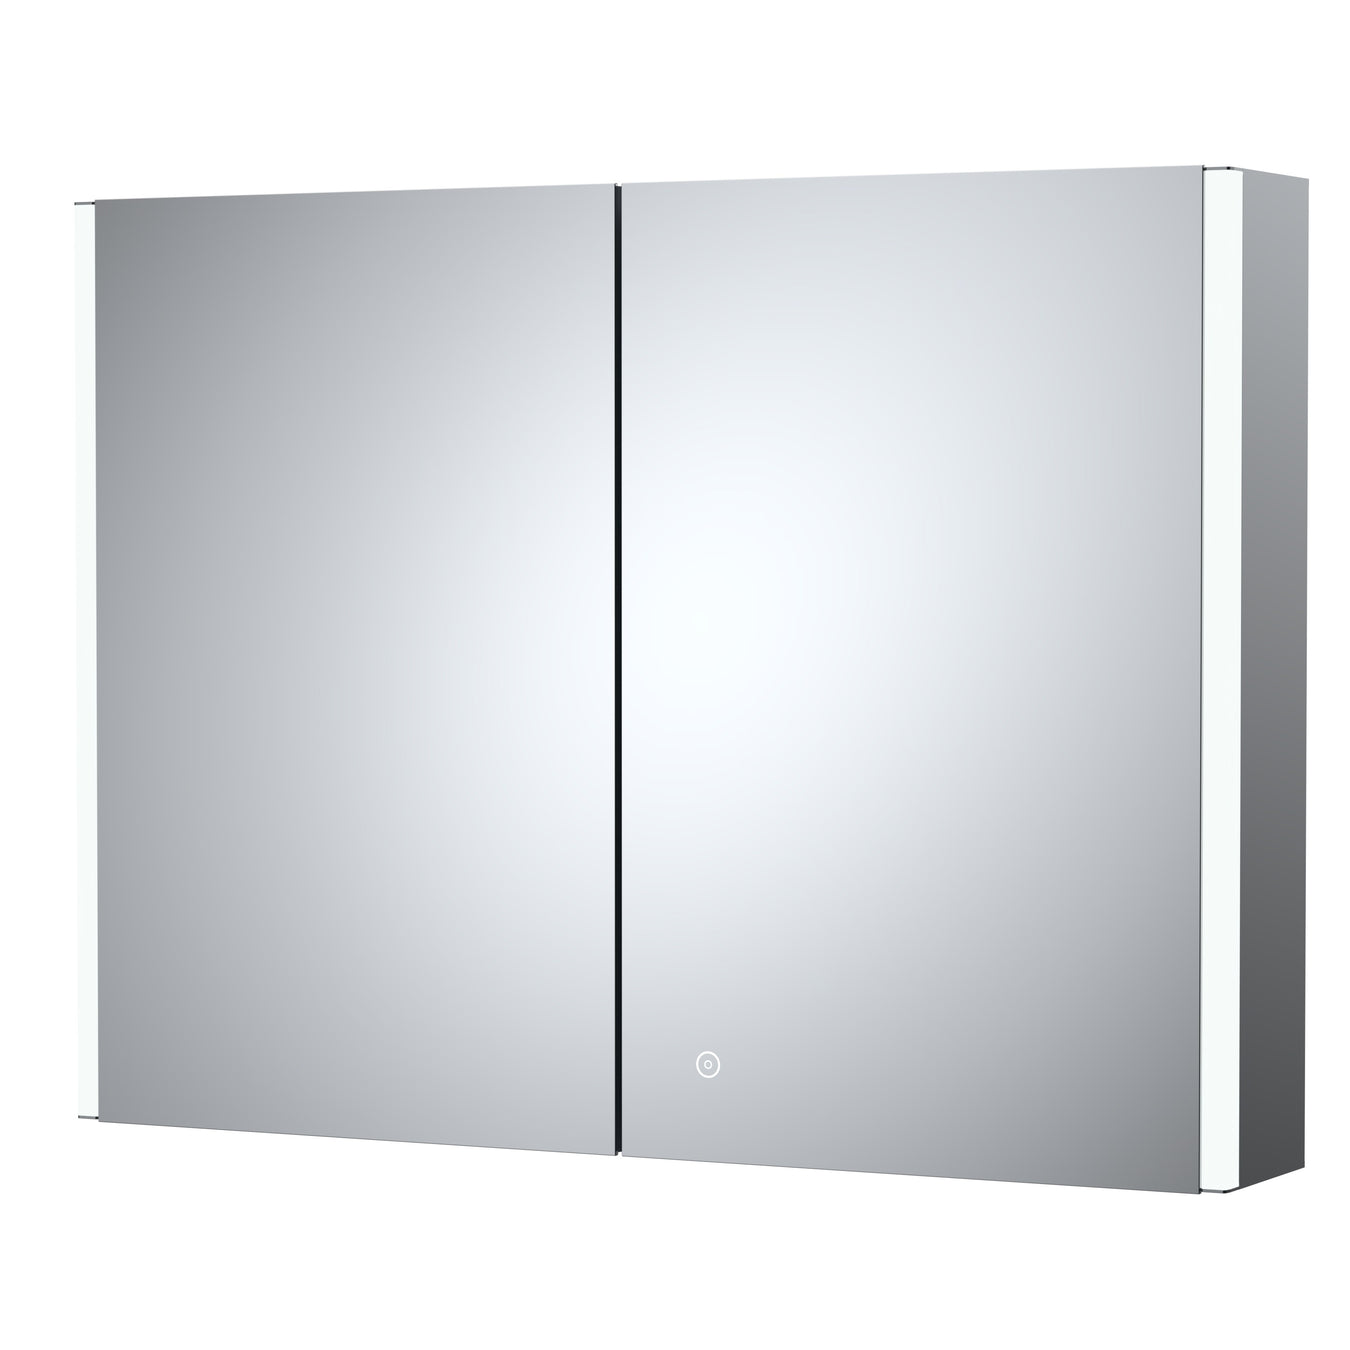 Bathroom Mirrors - Contemporary Ranges